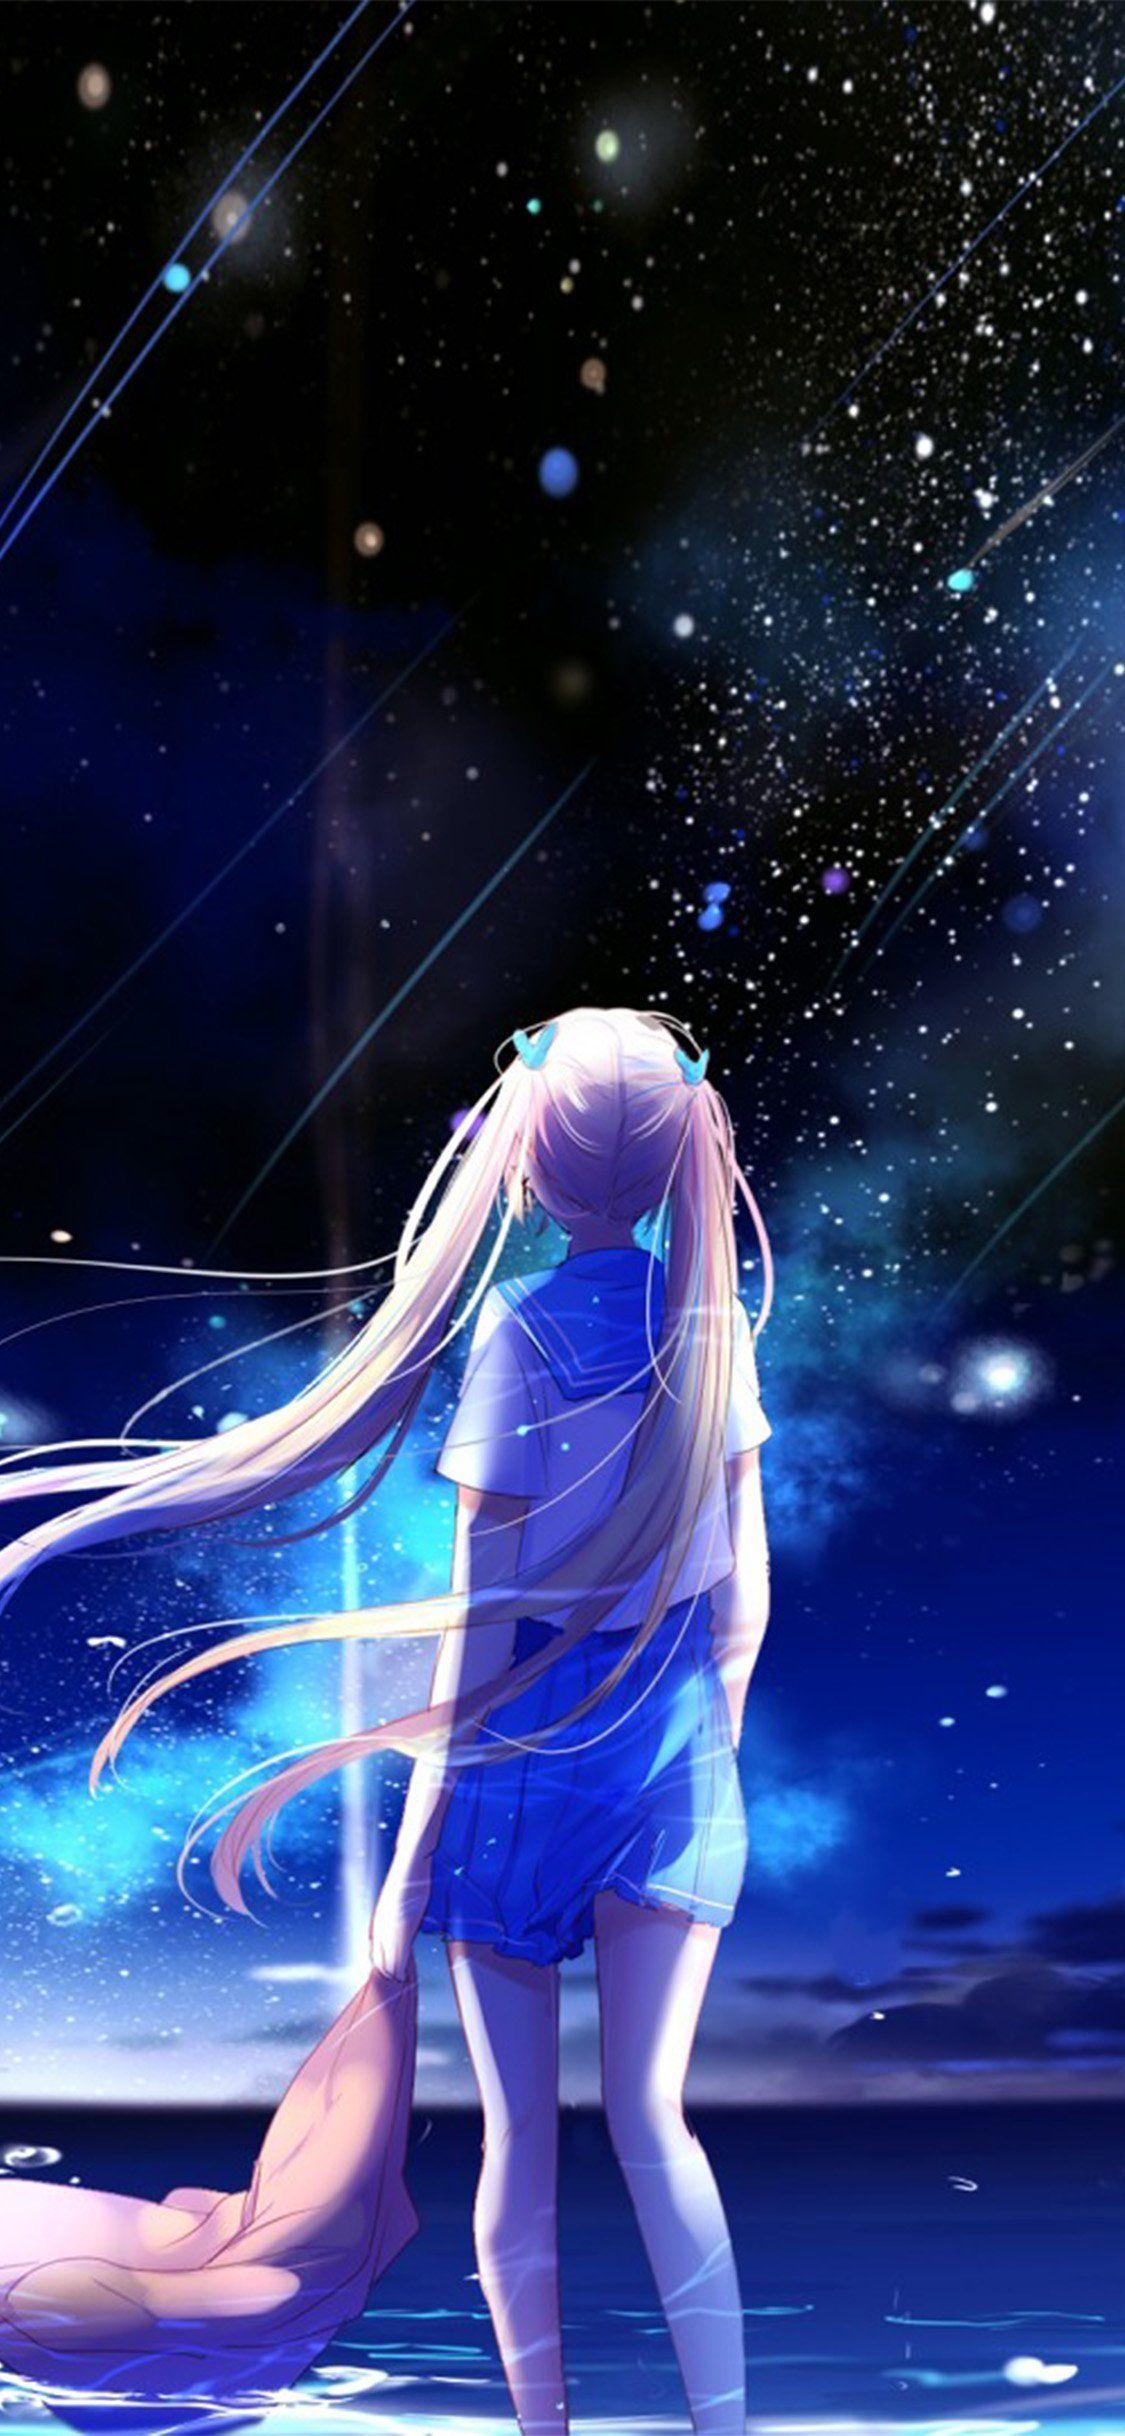 iPhone X wallpaper. anime night space star